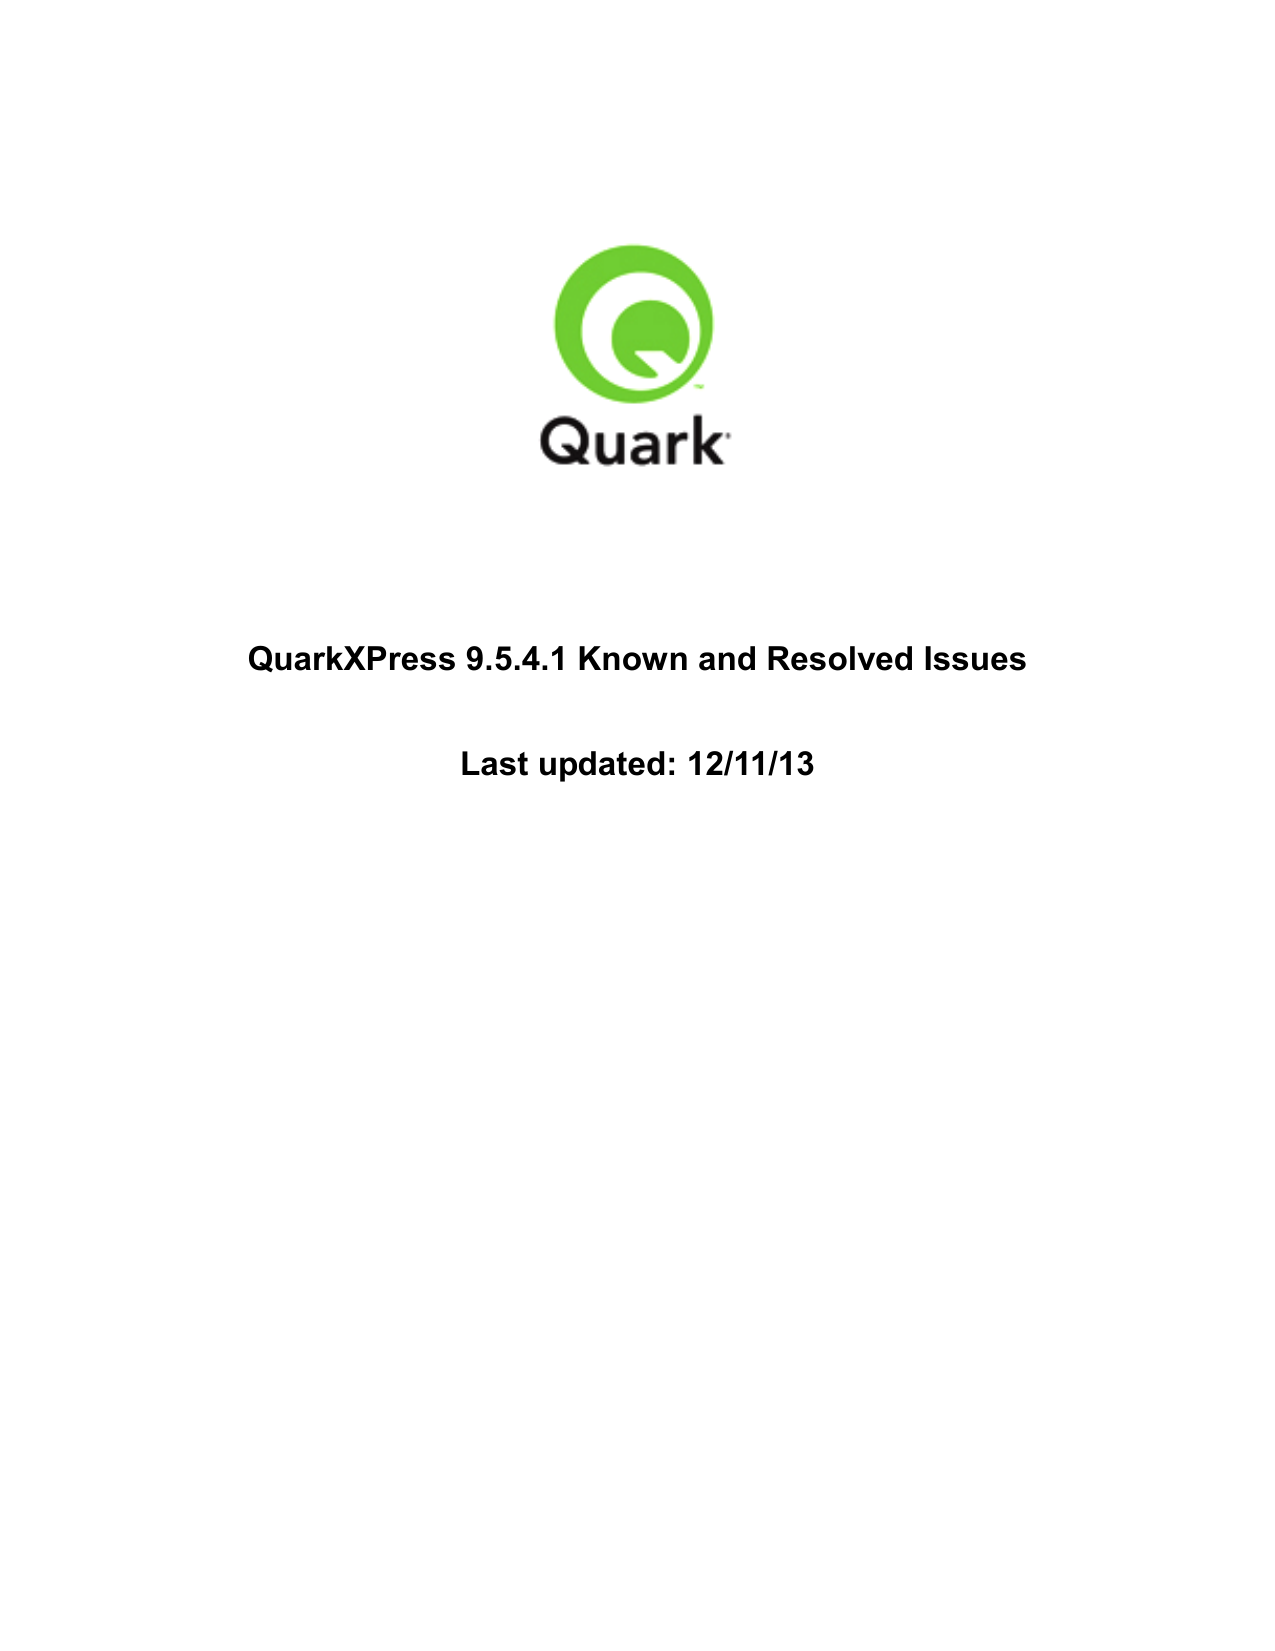 quarkxpress 2015 manual